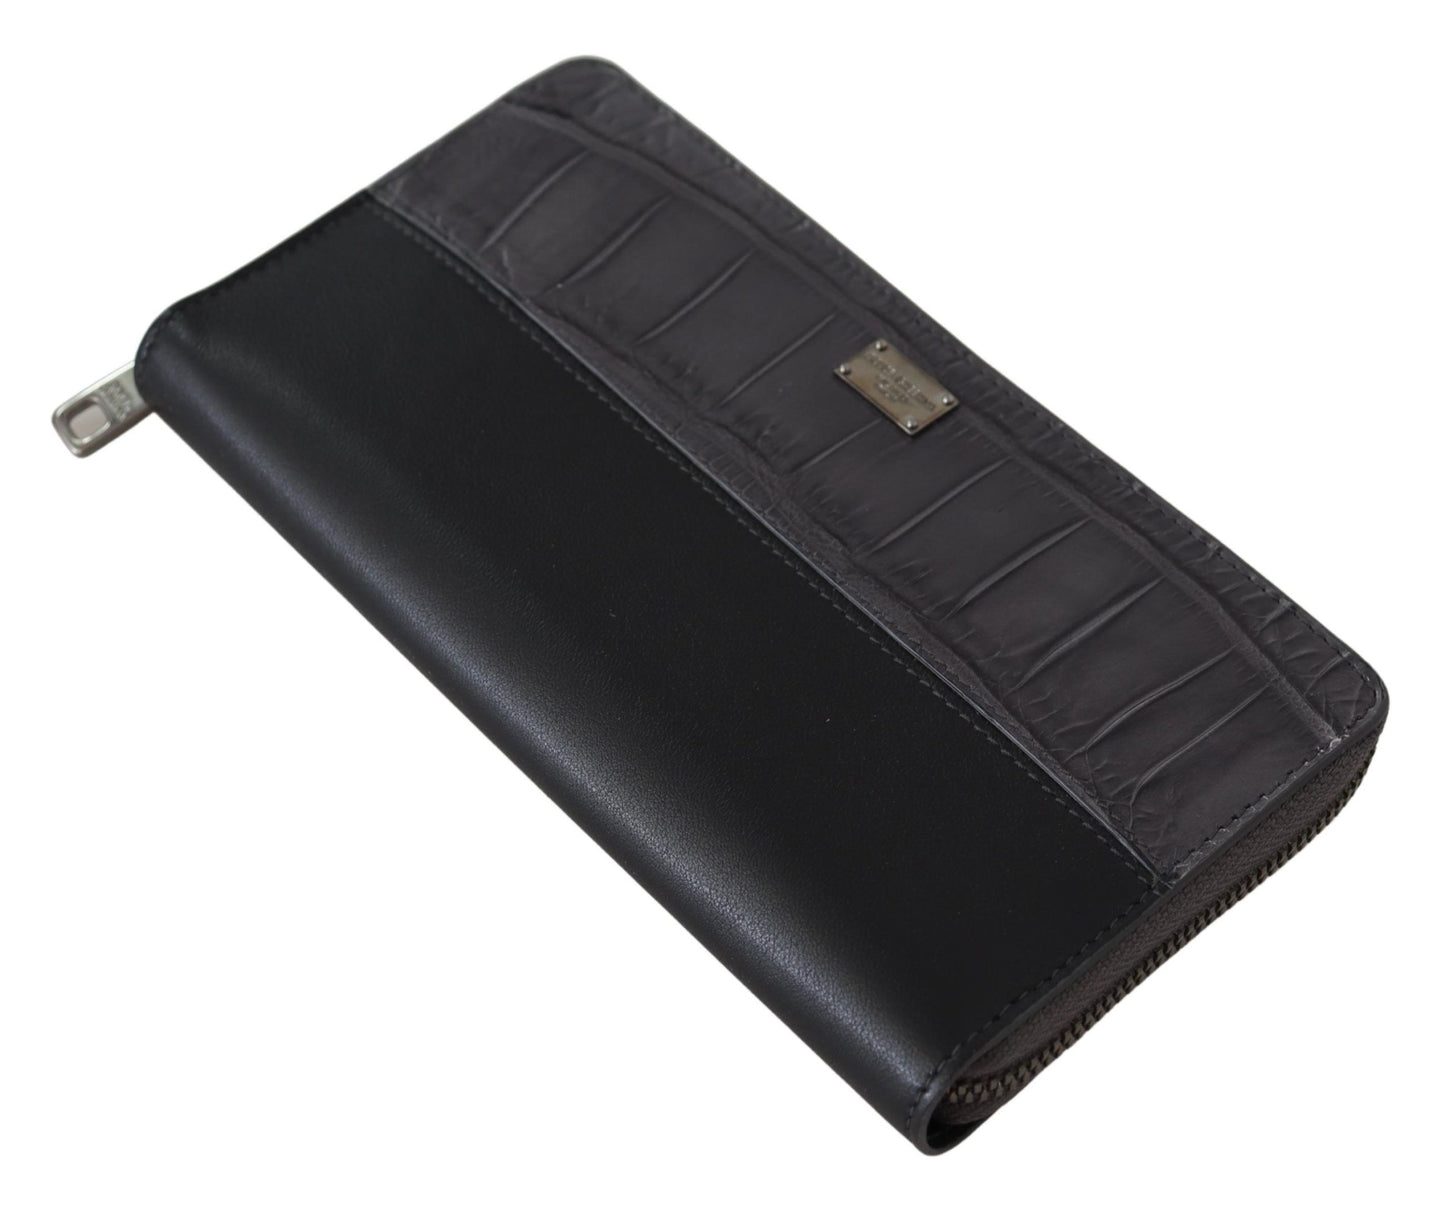 Elegant Textured Leather Zip-Around Wallet